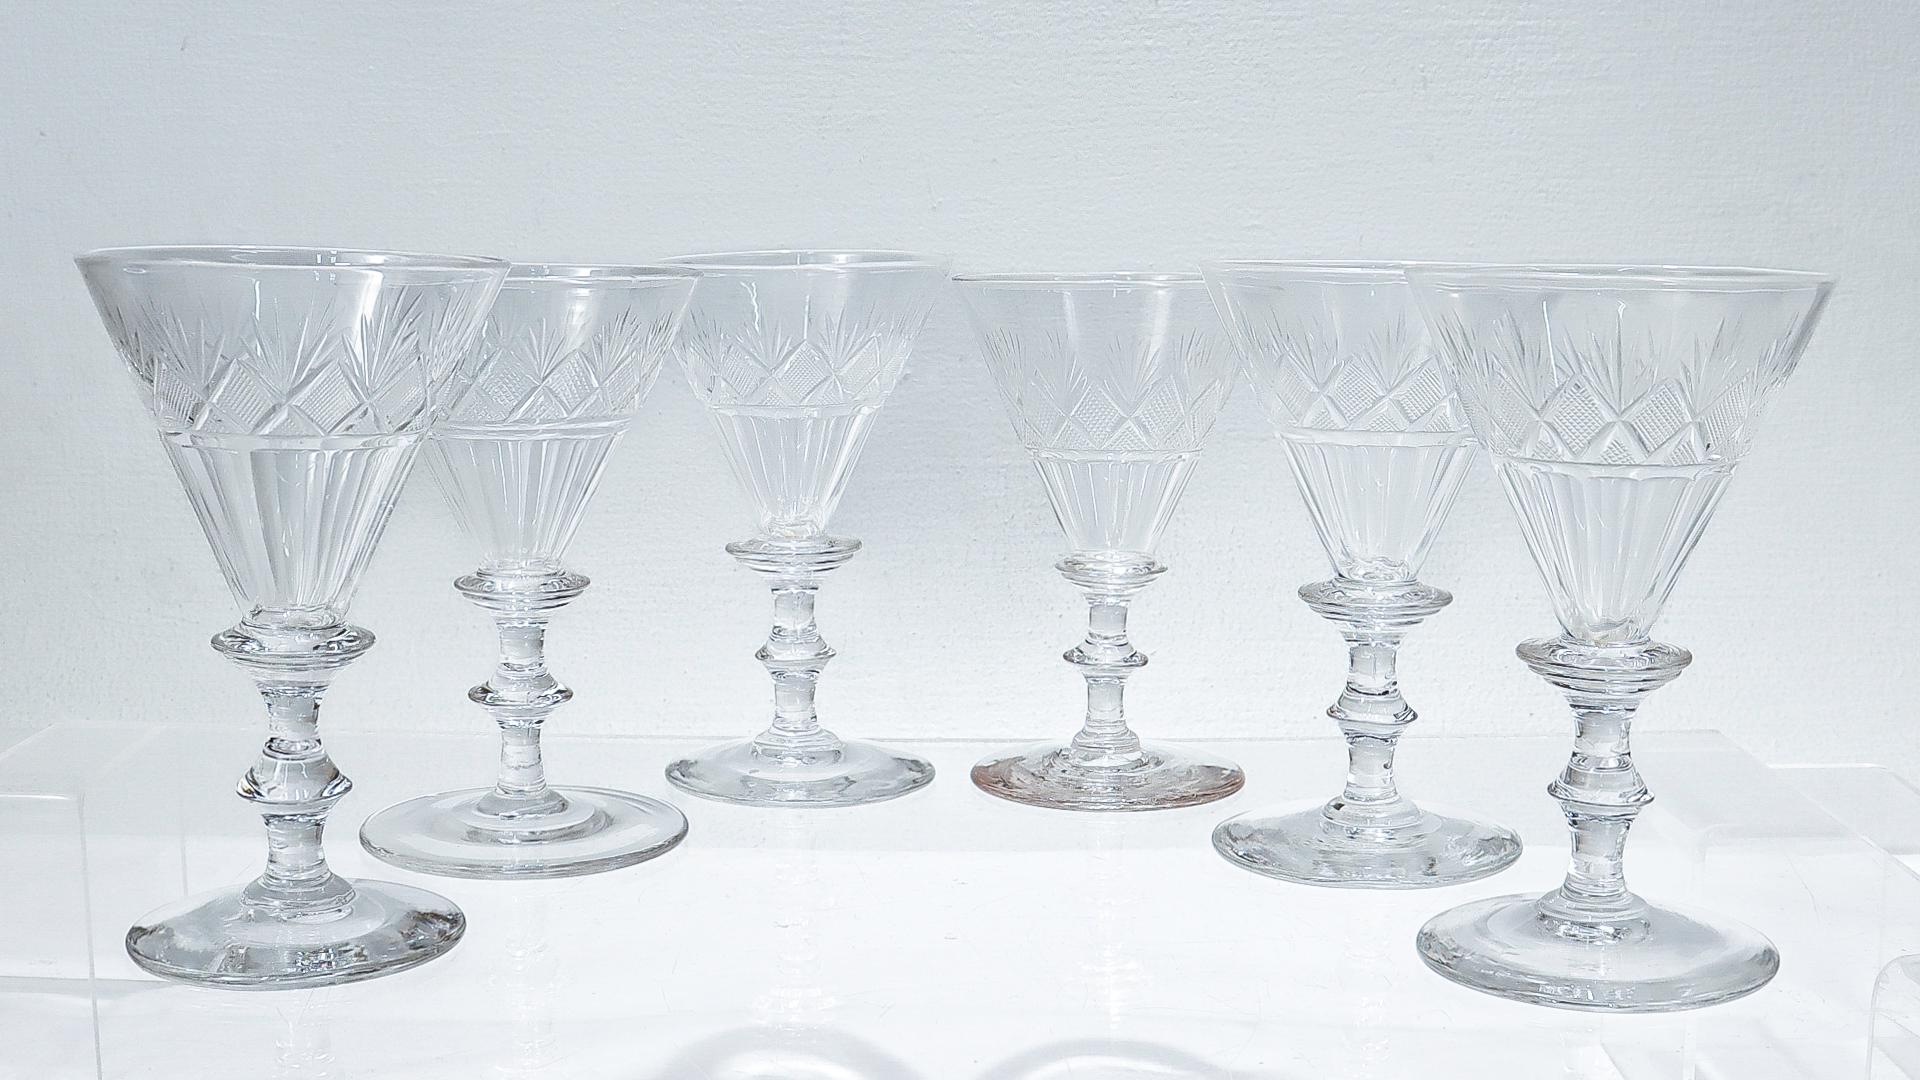 19th century drinking glasses